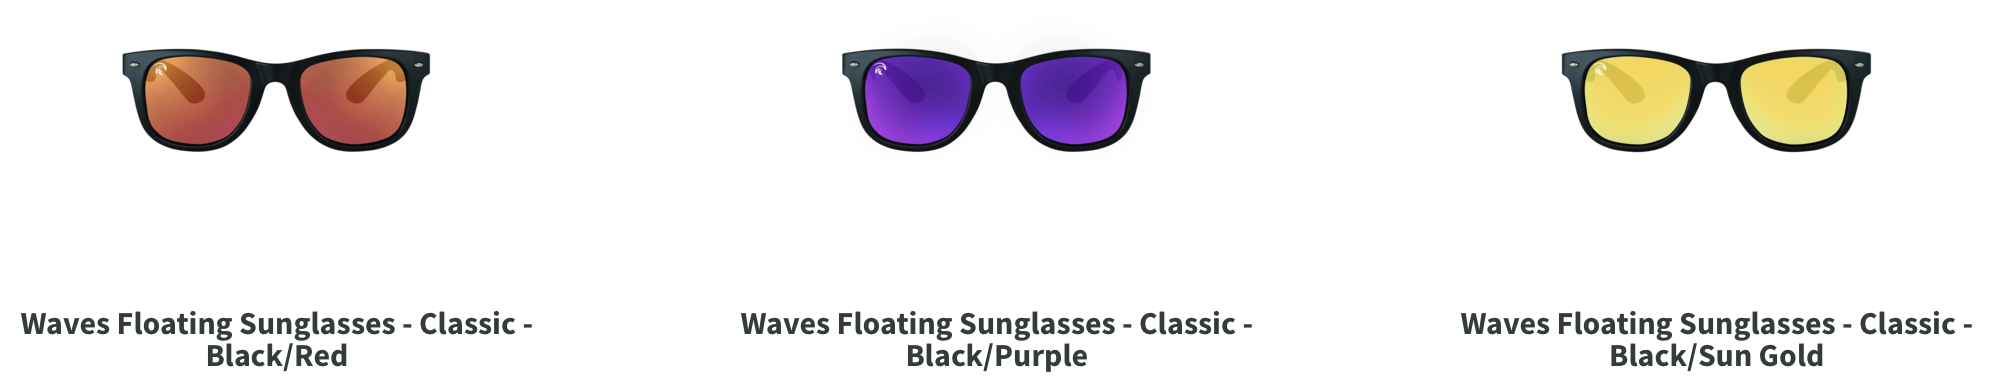 Waves Gear Sunglasses